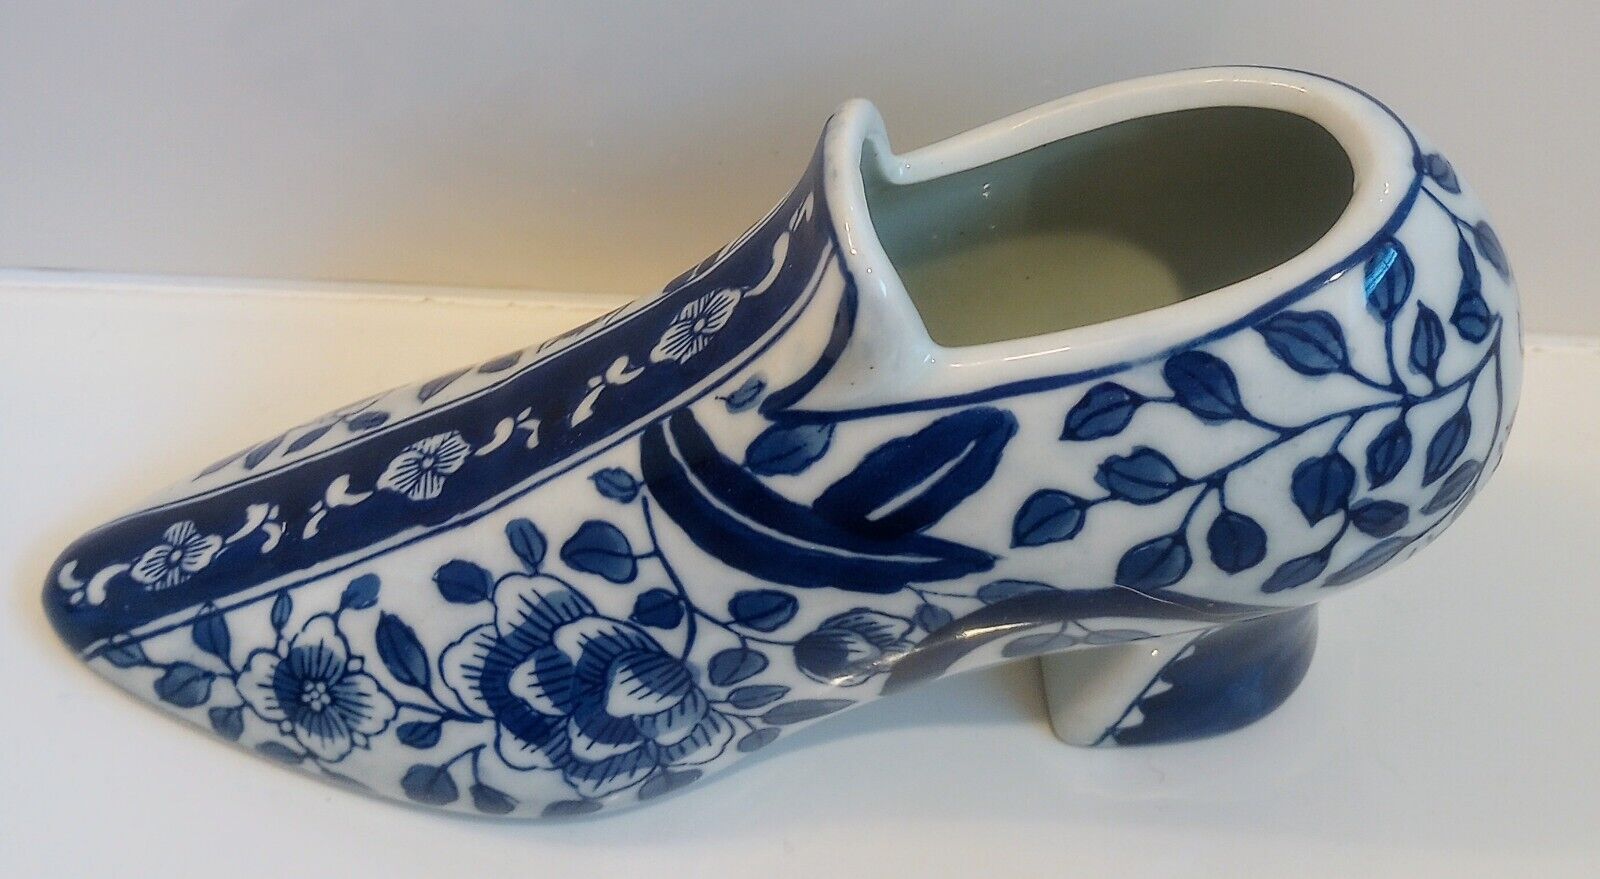 Vintage Blue & White Ceramic Victorian Style Shoe Planter